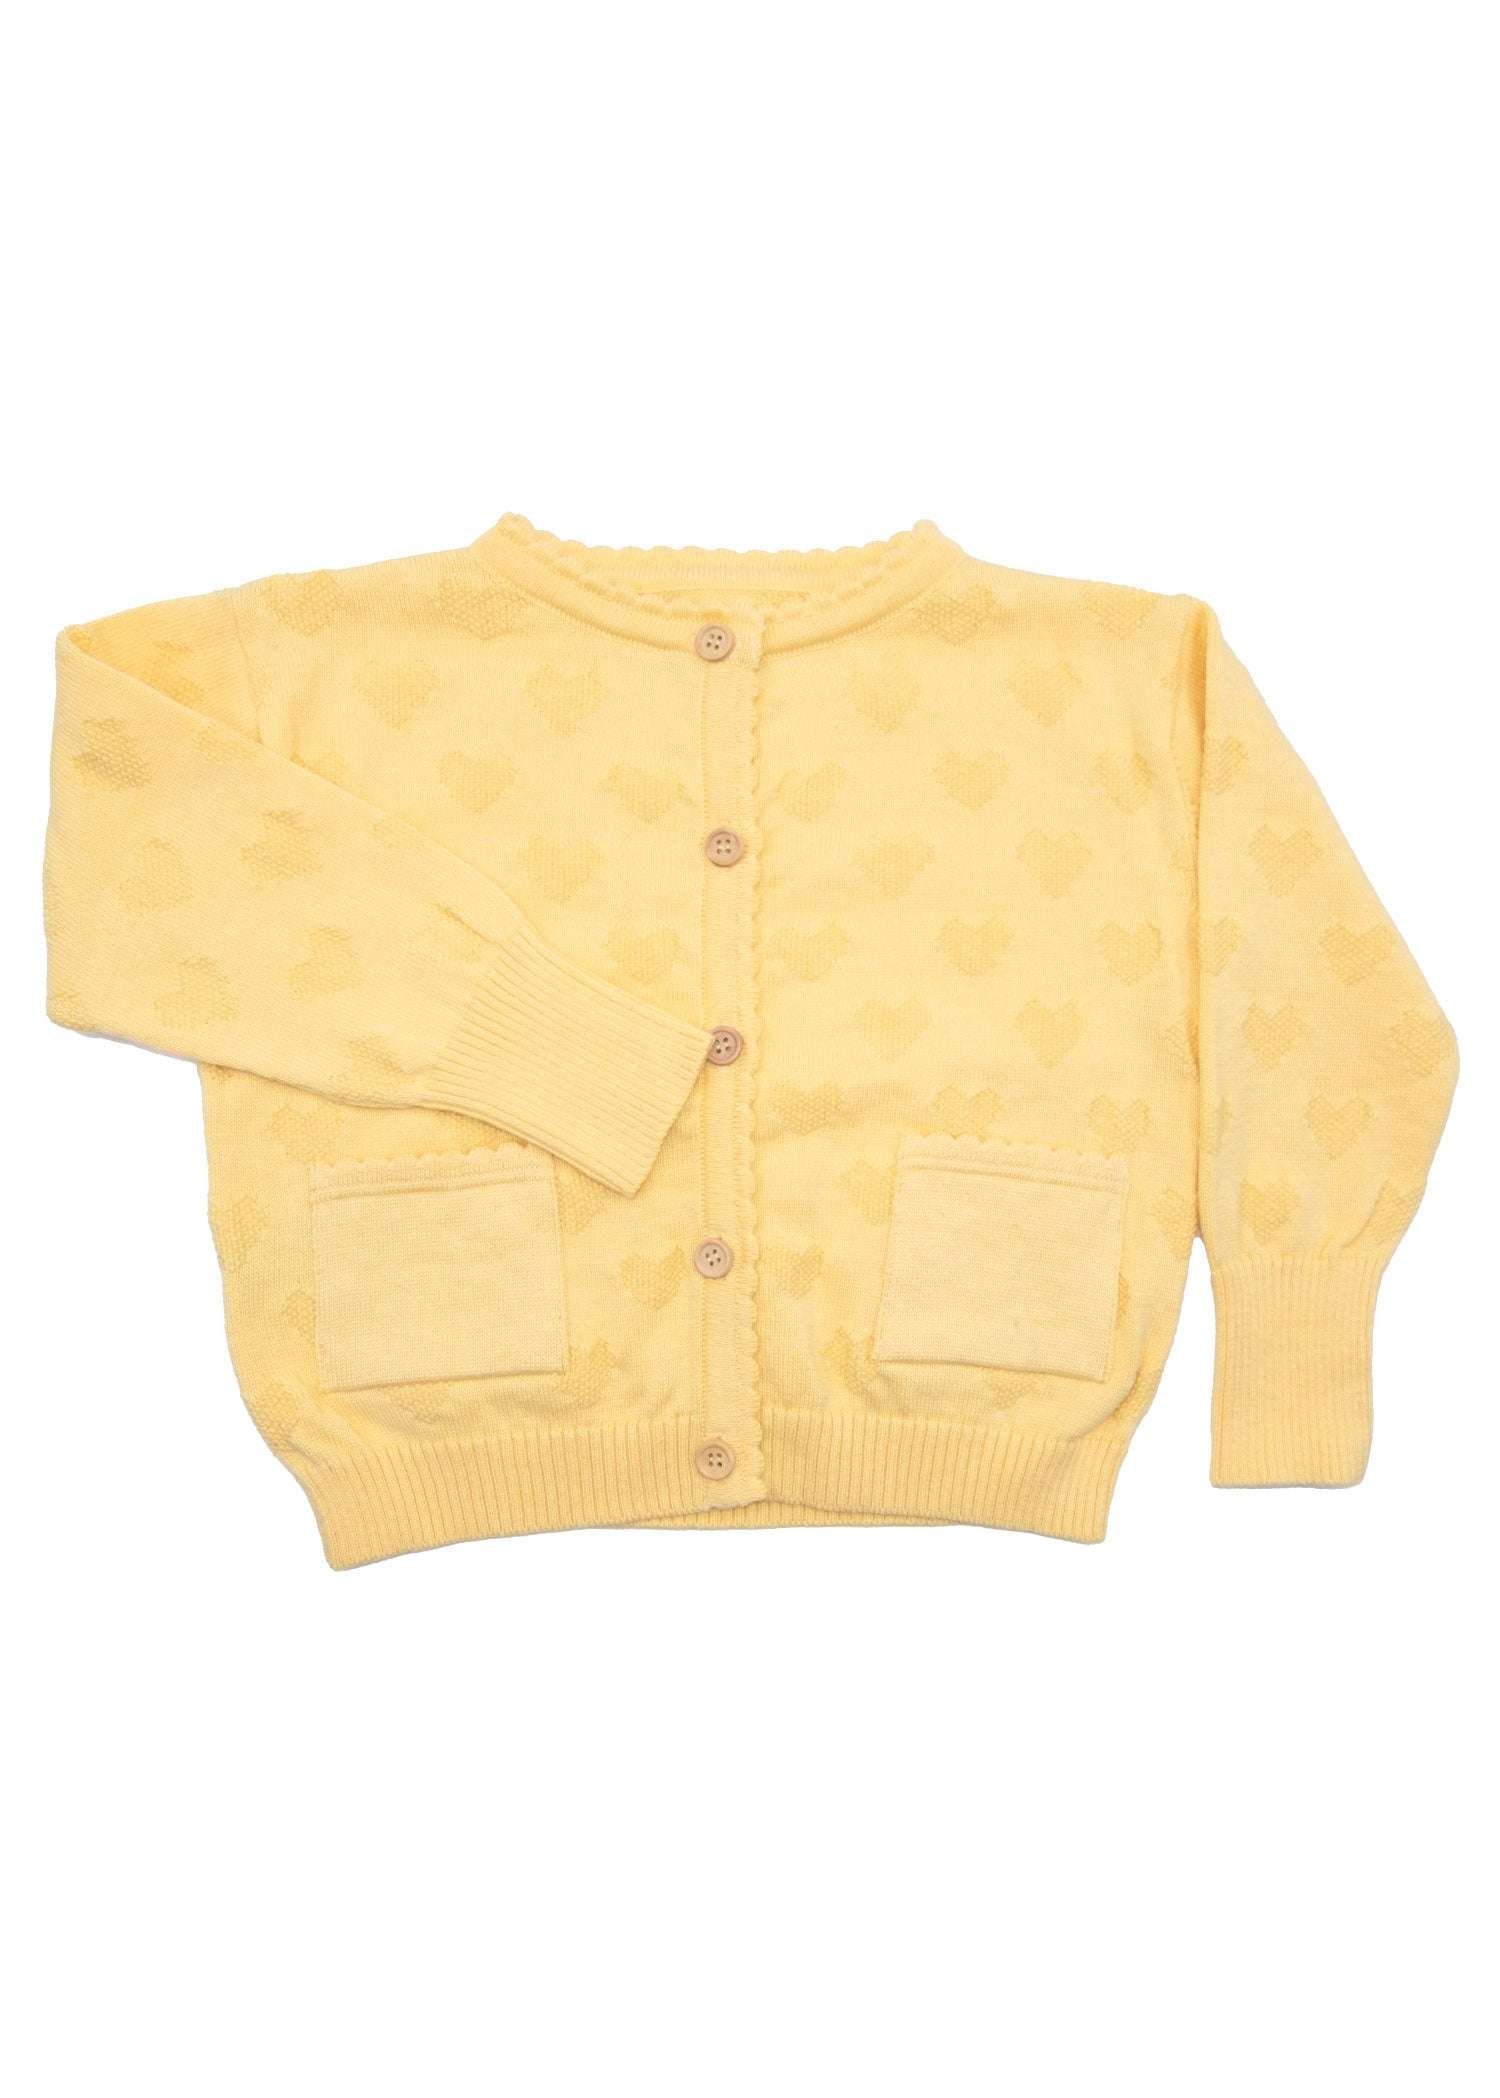 Organic Knitwear Baby Girl Cardigan Heart Pattern